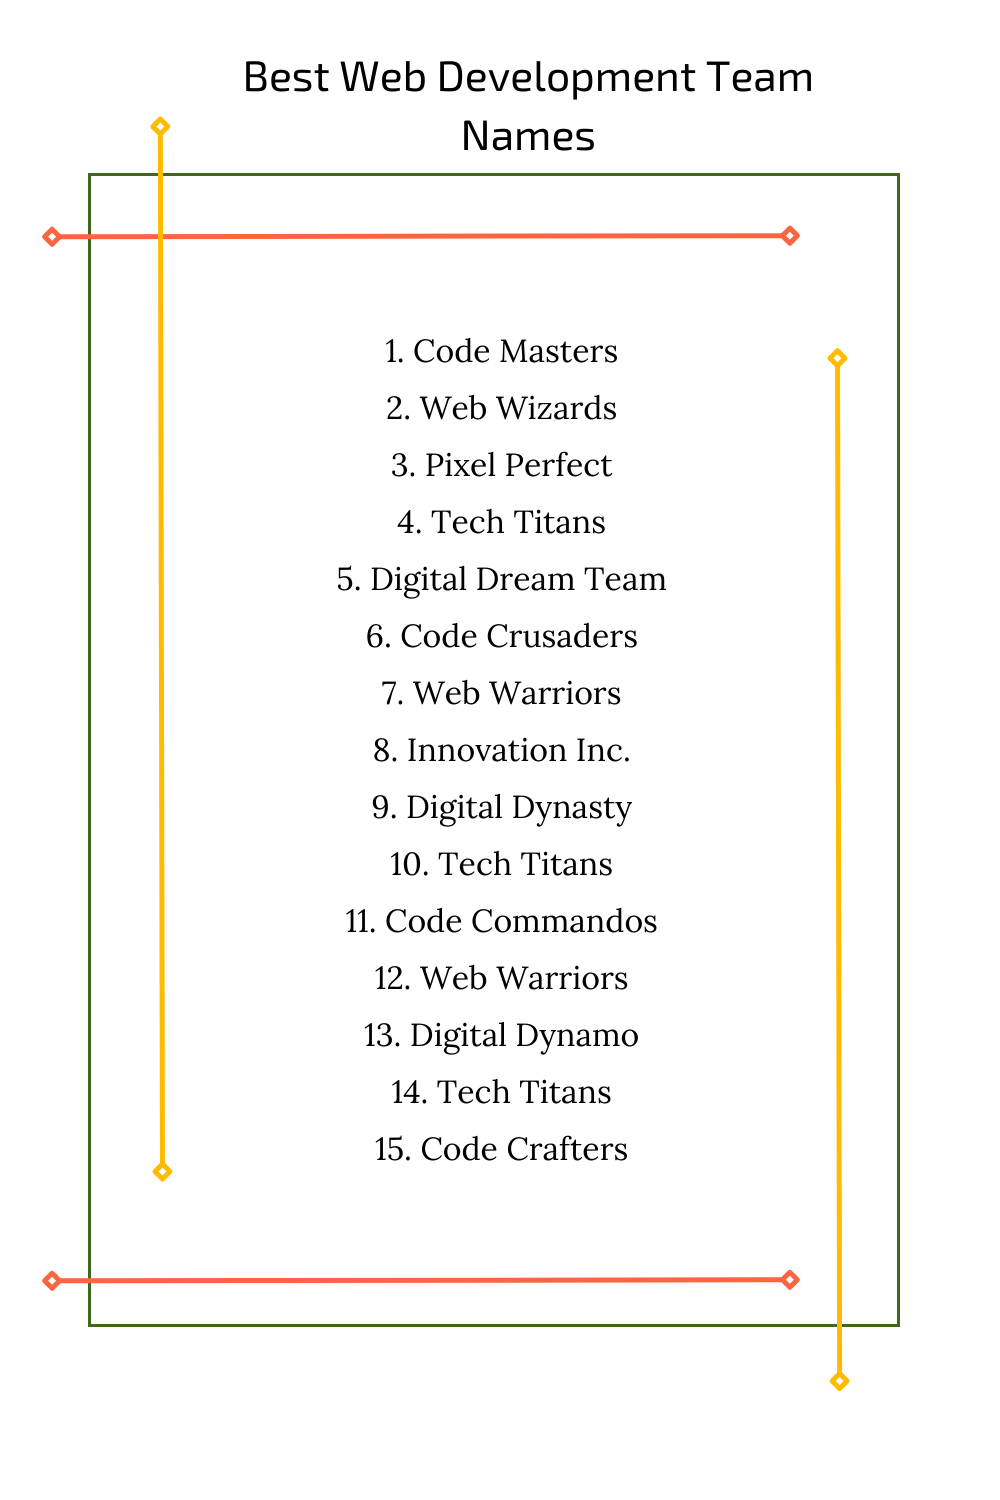 Best Web Development Team Names